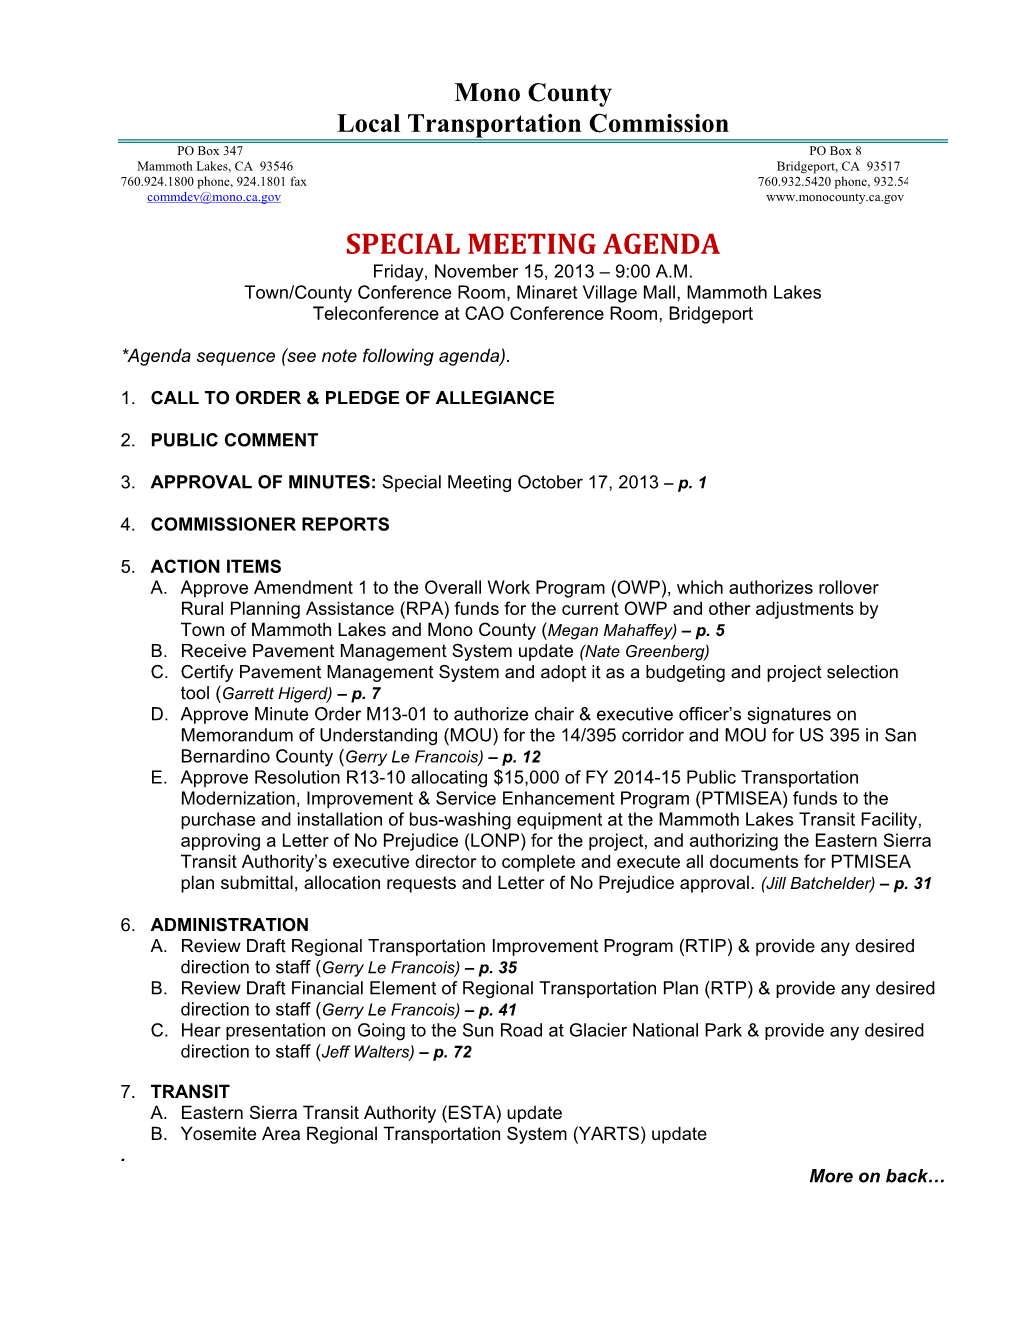 SPECIAL MEETING AGENDA Friday, November 15, 2013 – 9:00 A.M